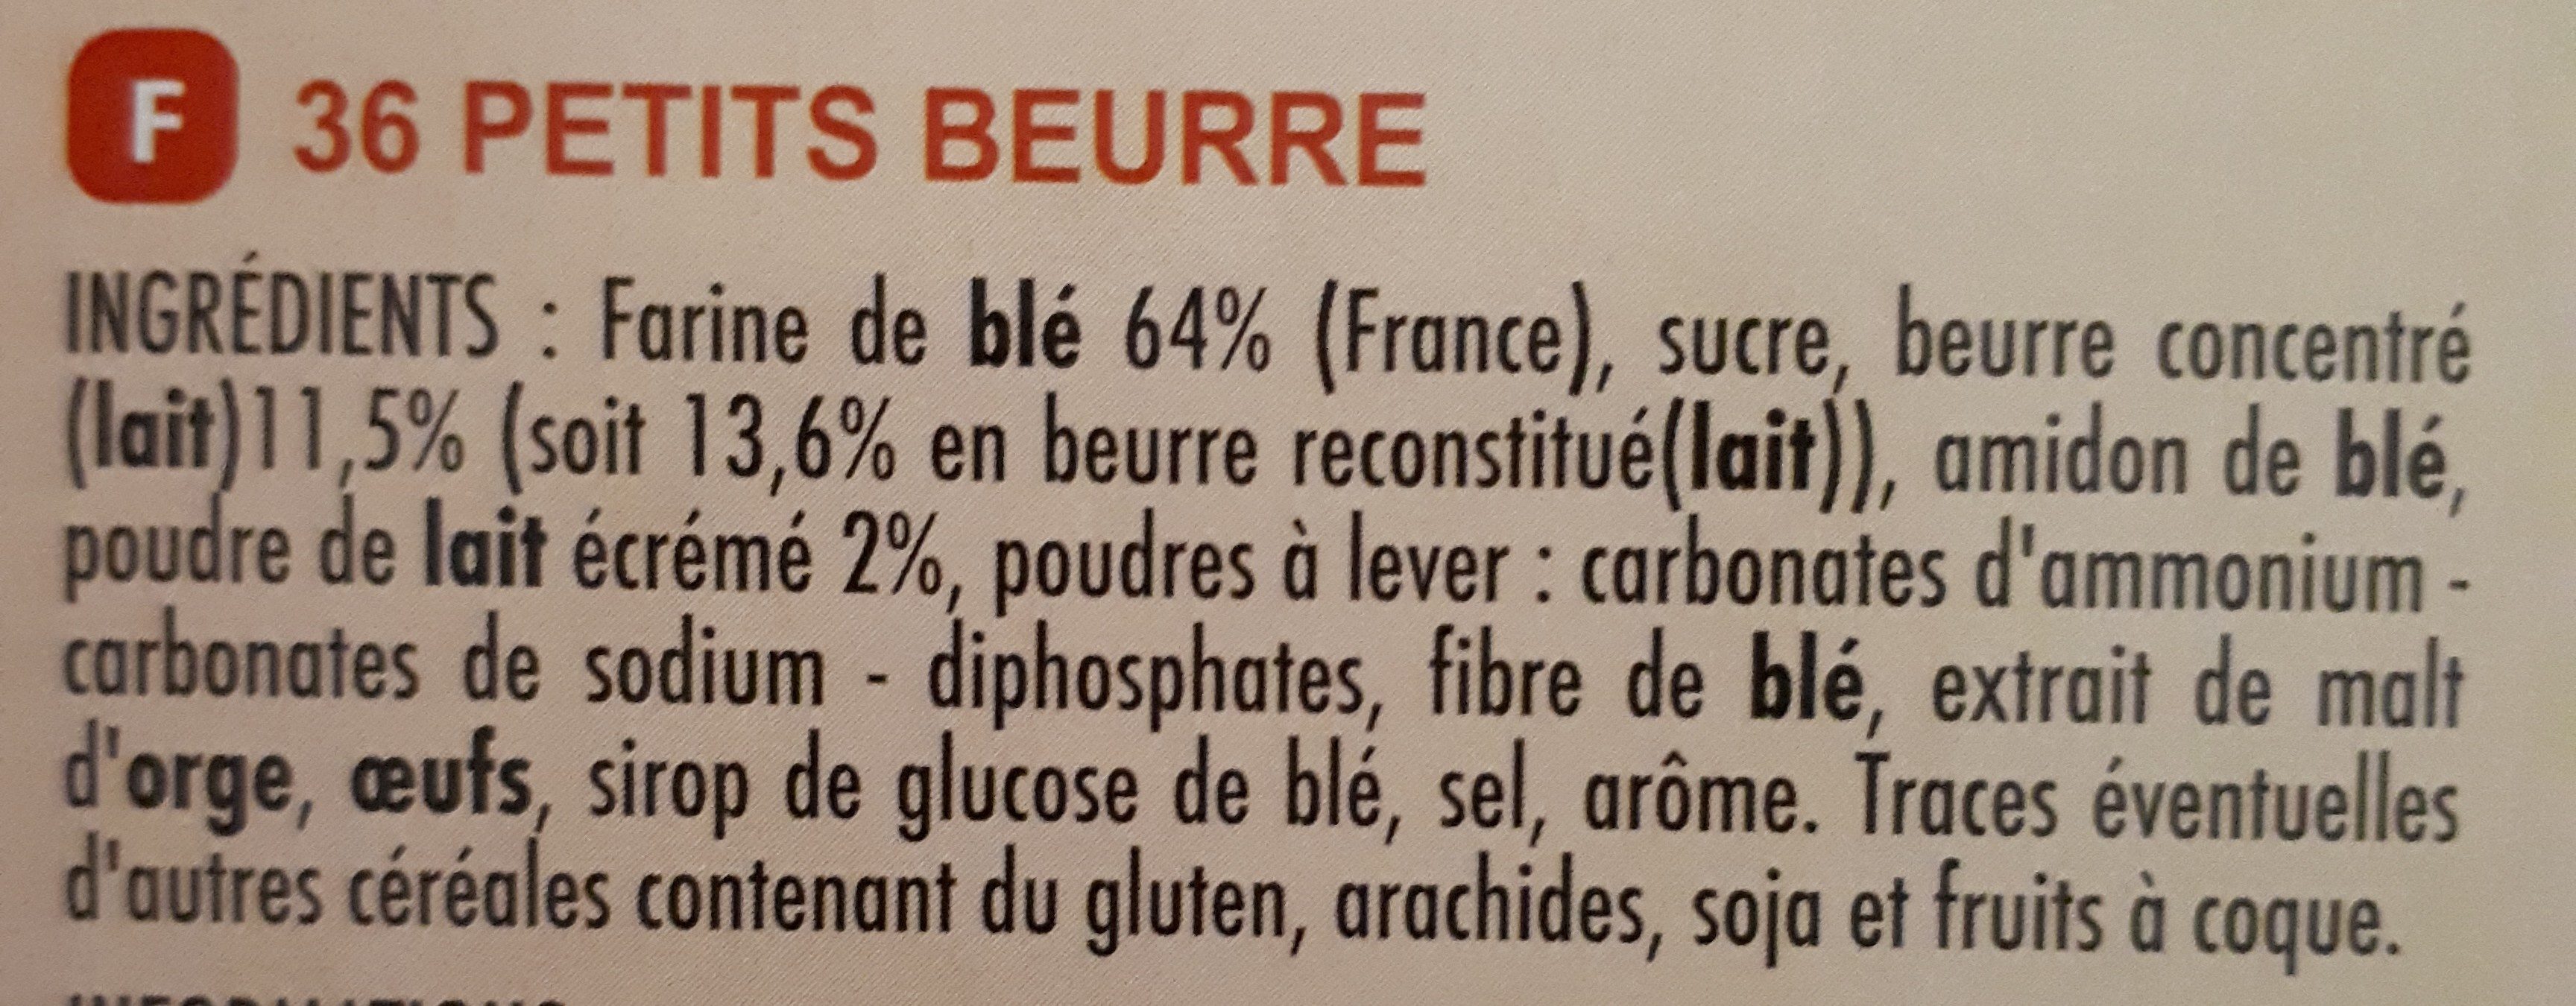 Petit beurre Pocket - Ingredients - fr